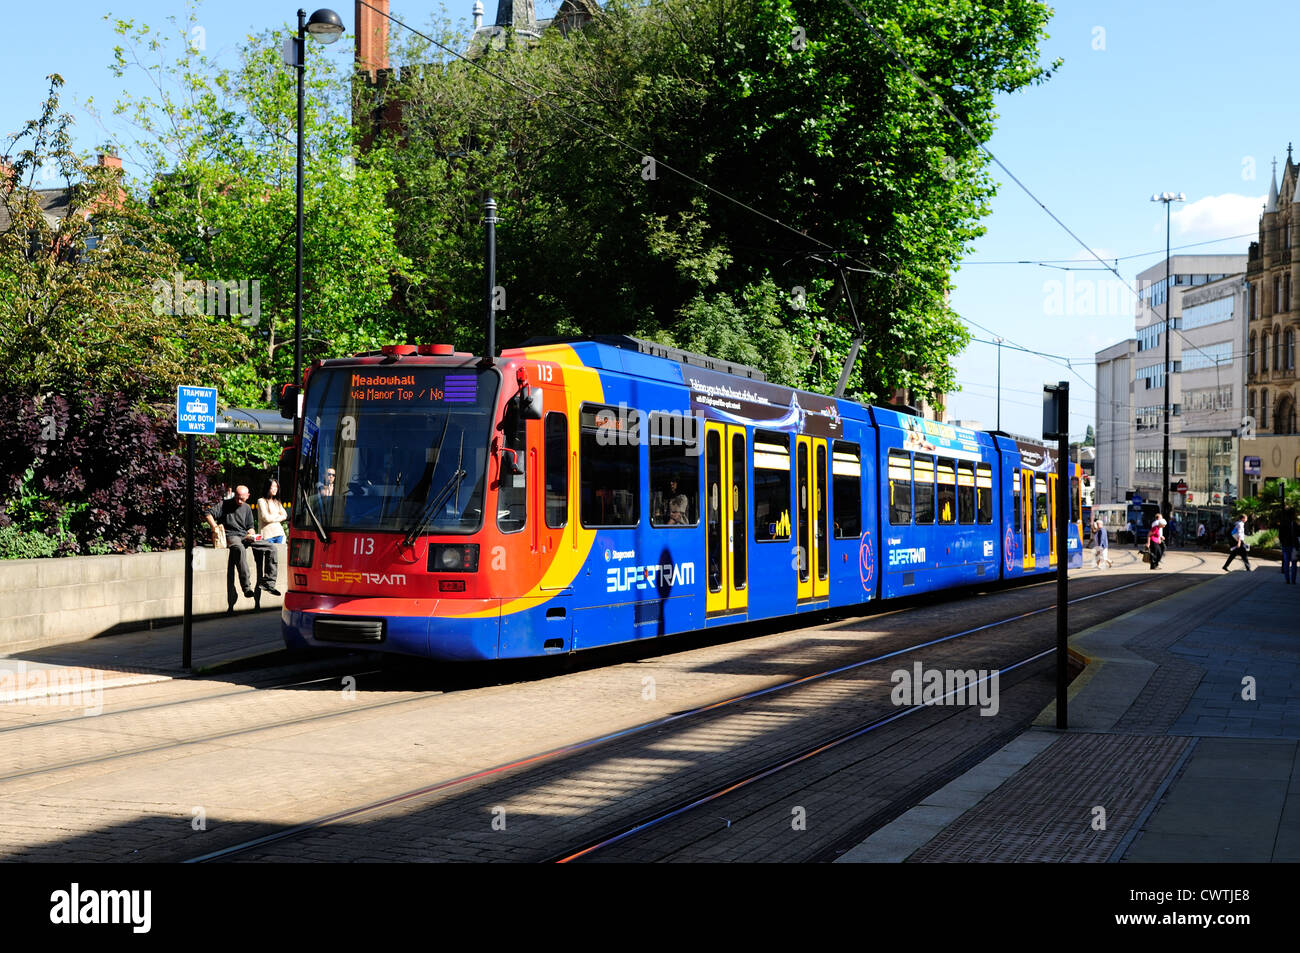 Sheffield City Super Tram. Stock Photo